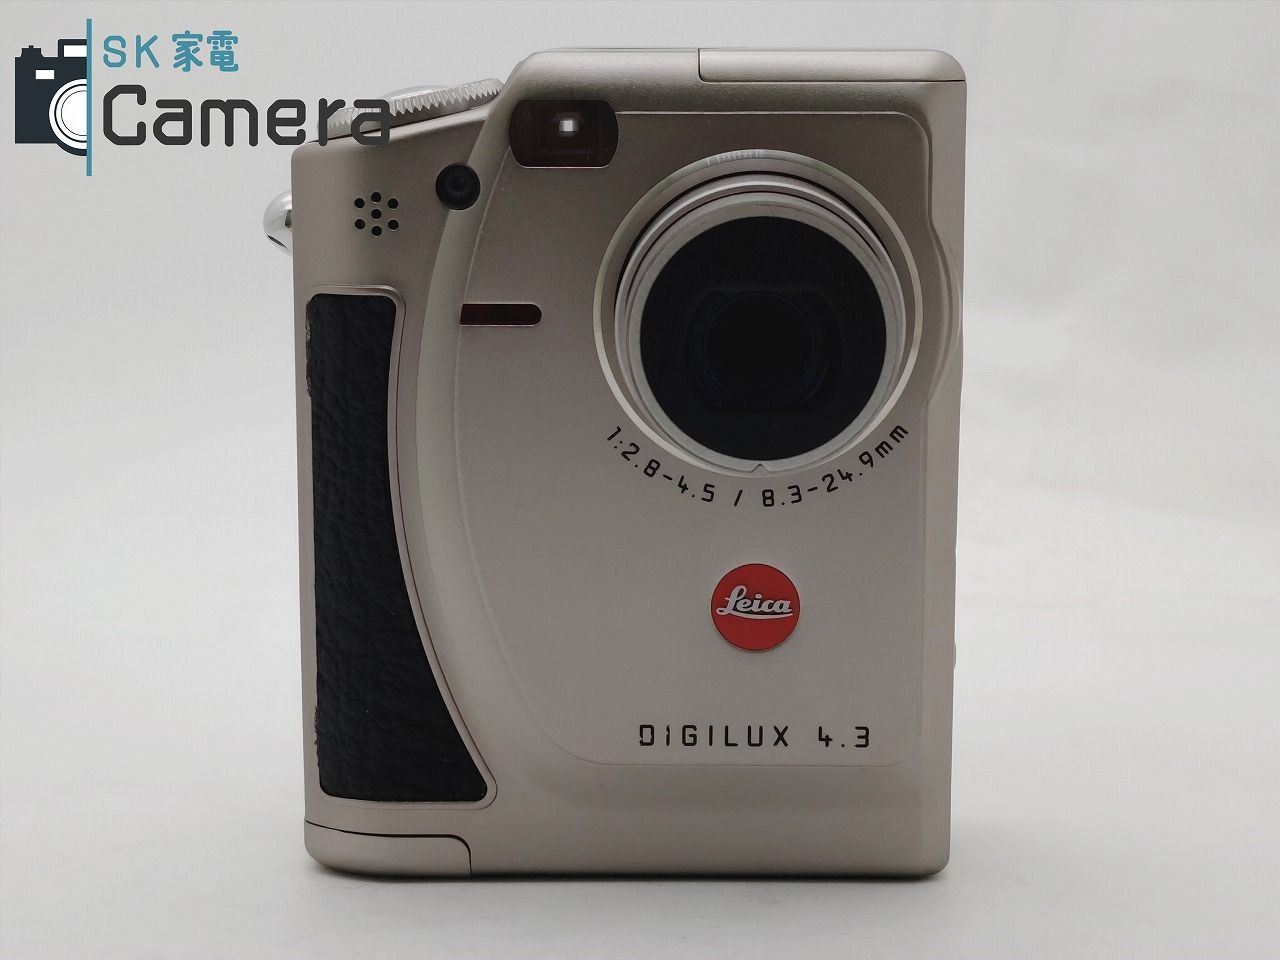 LEICA ライカ digilux 4.3 デジタルカメラ問題なし - デジタルカメラ